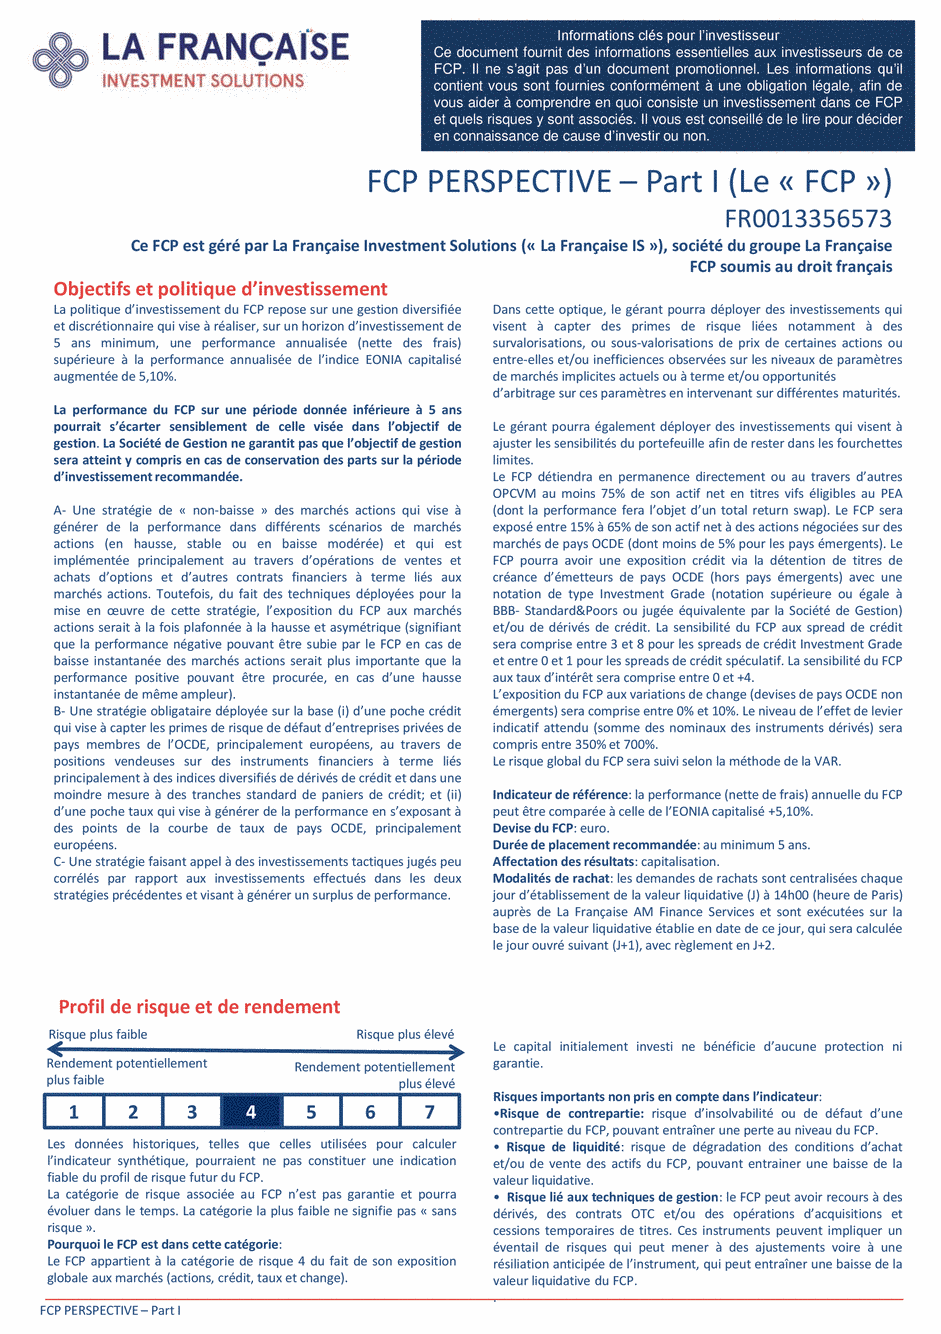 DICI FCP Perspective - Part I - 09/04/2019 - Français